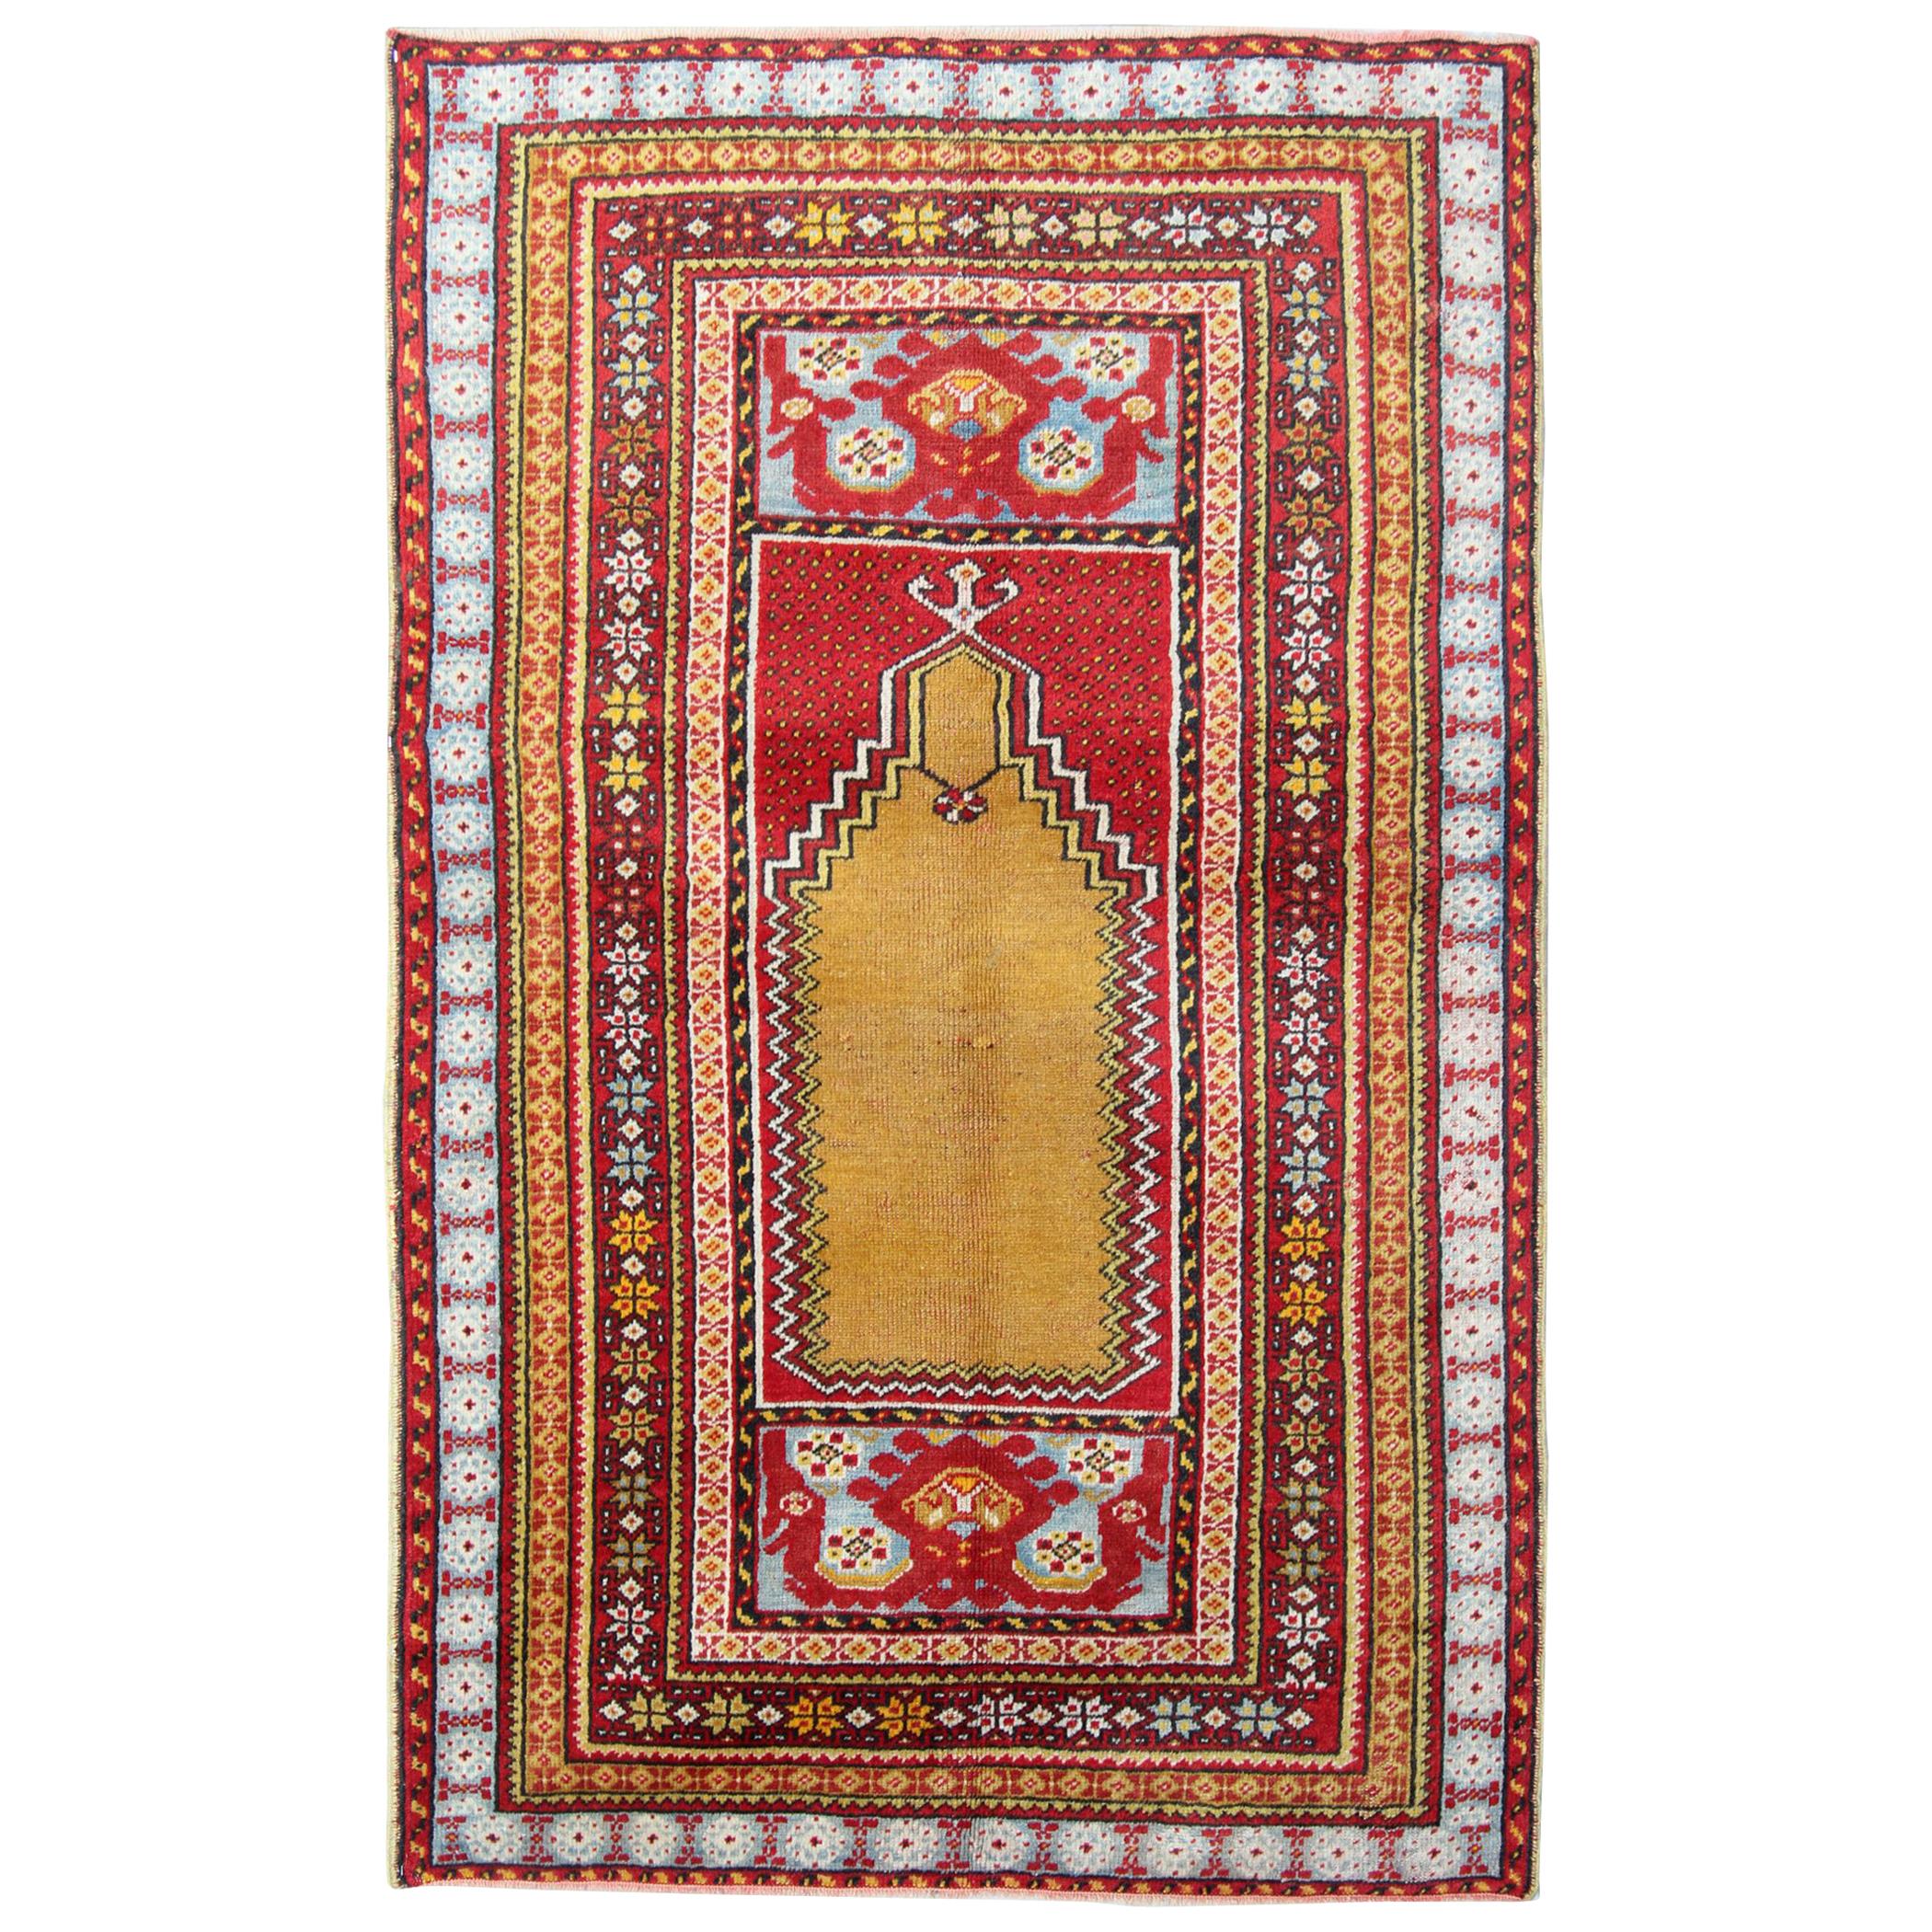 Antique Rugs Handmade Carpet, Turkish Rug, Living Room Rug for Sale Home Decor For Sale